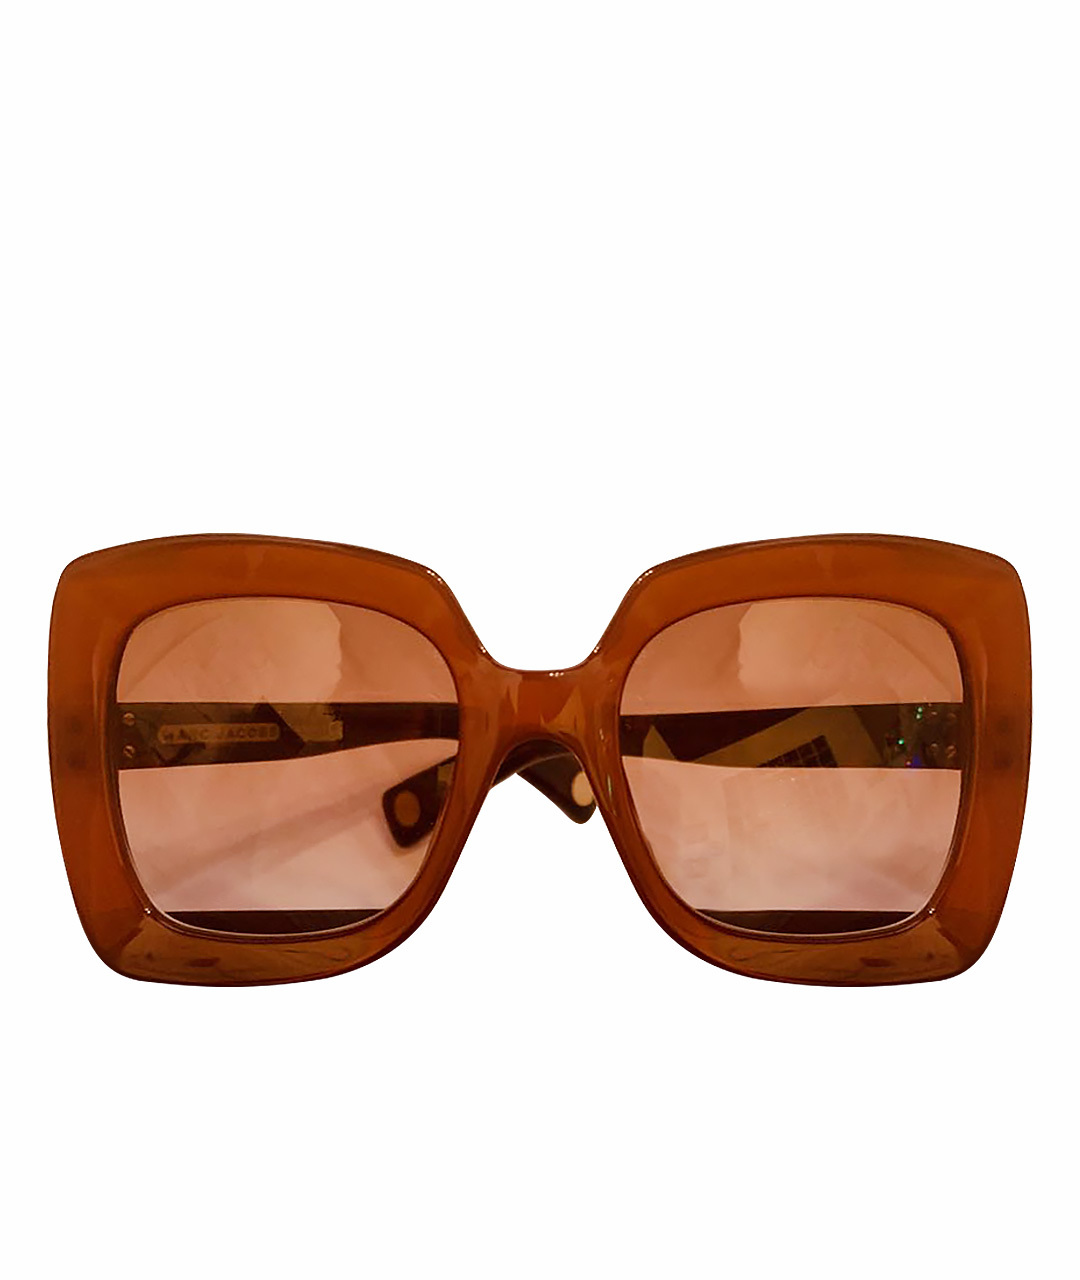 MARC BY MARC JACOBS Коричневые пластиковые солнцезащитные очки, фото 1